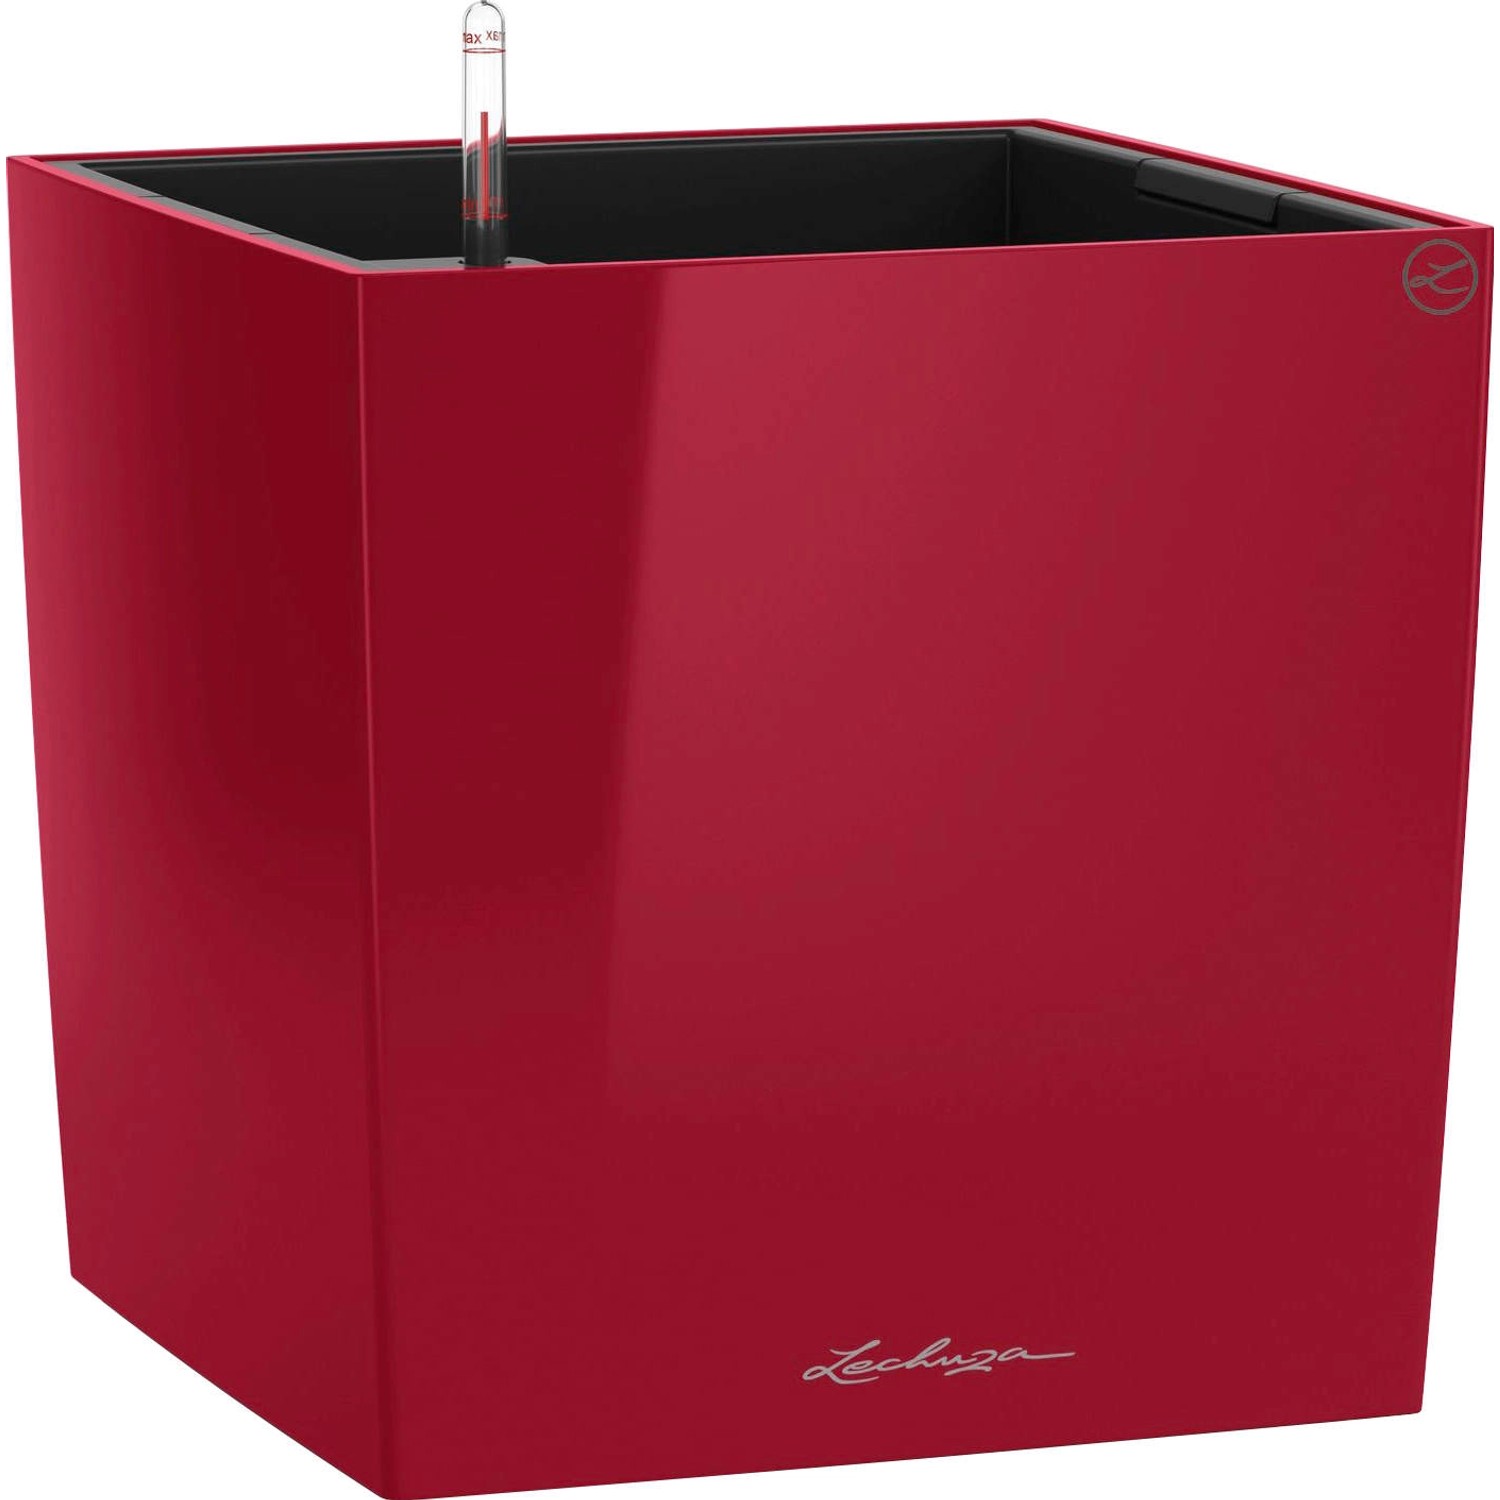 Lechuza Pflanzgefäß Cube Premium 50 cm x 50 cm Scarlet Rot hochglanz von Lechuza